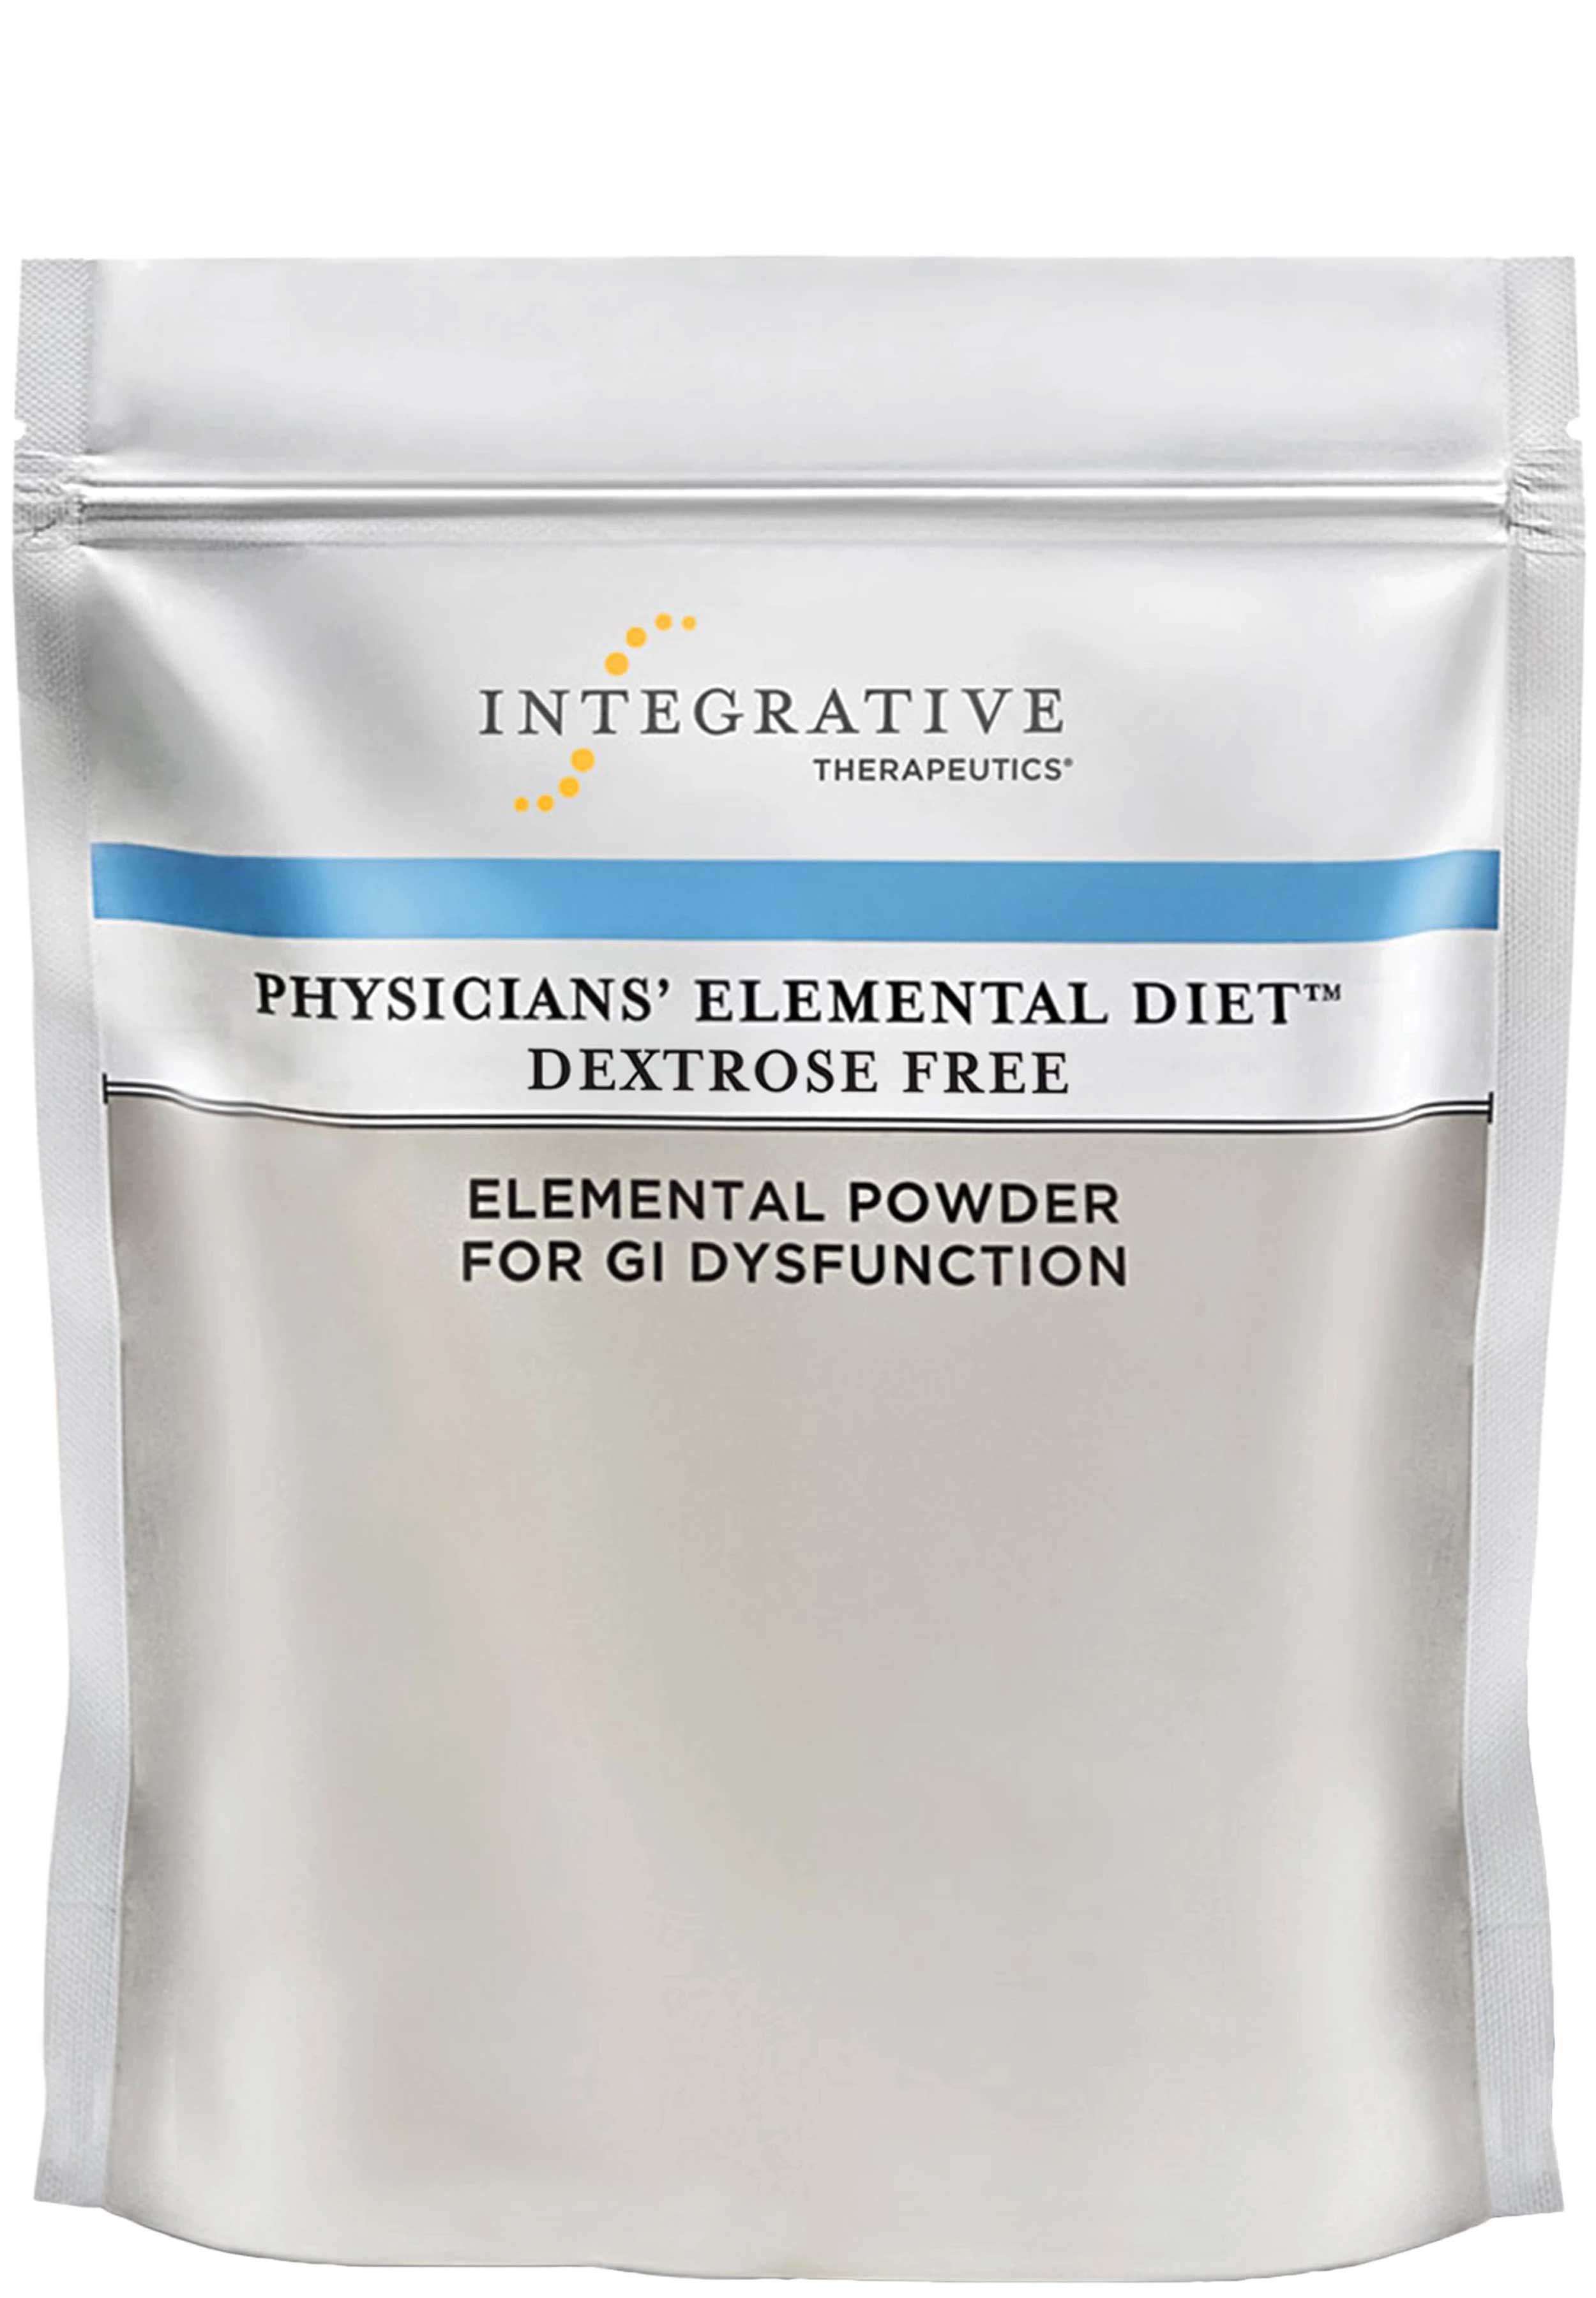 Integrative Therapeutics Physicians’ Elemental Diet Dextrose Free